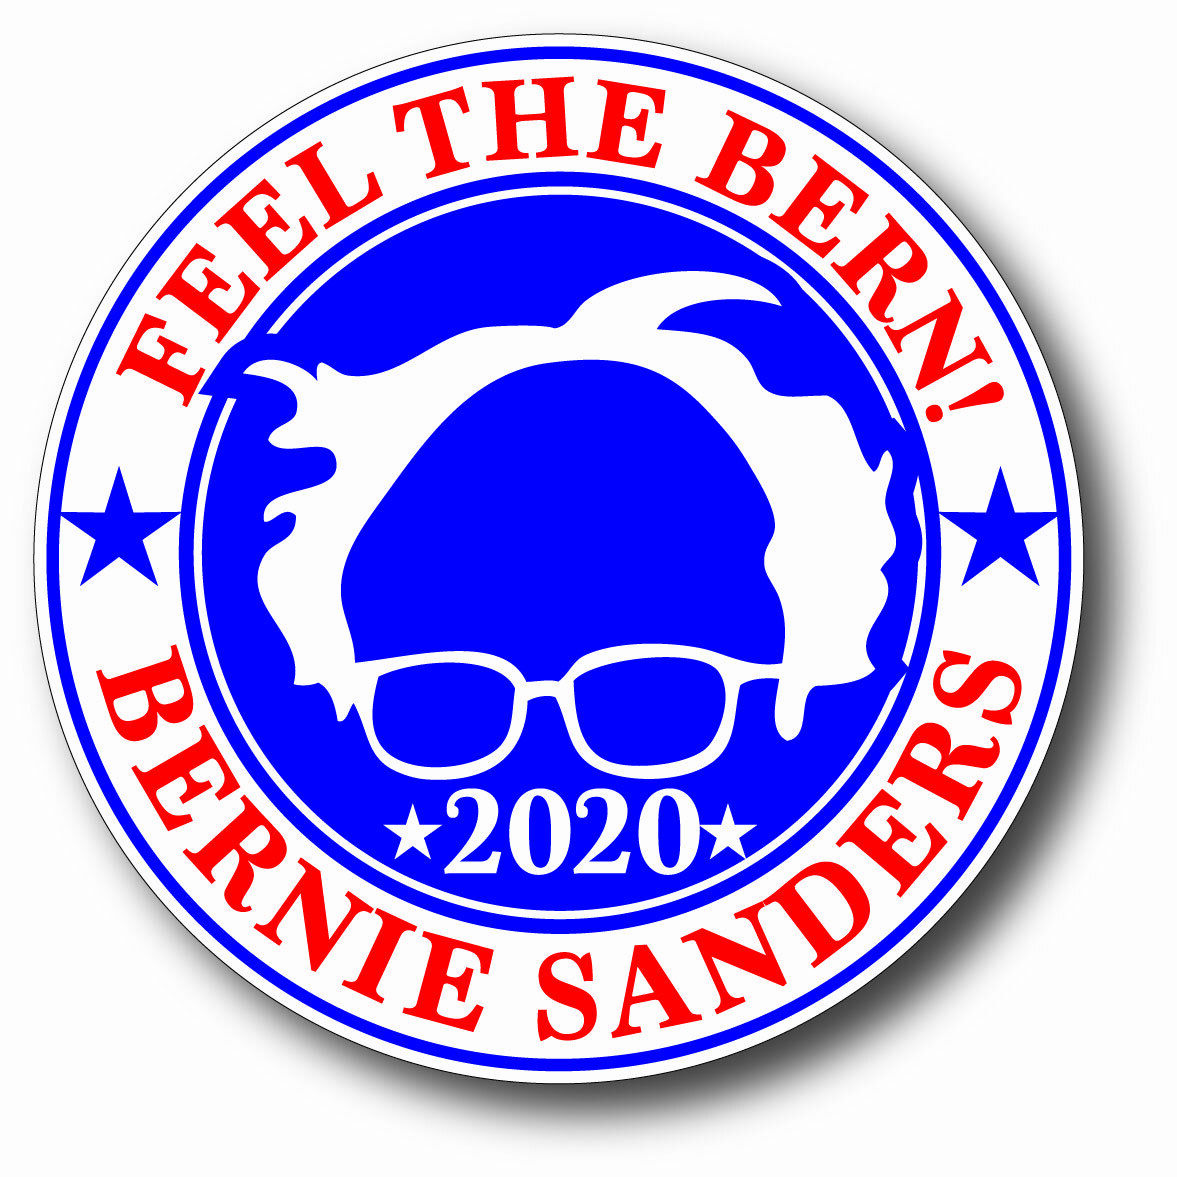 FEEL THE BERN BERNIE SANDERS FOR PRESIDENT 2020 CAMPAIGN STICKER DEMOCRAT